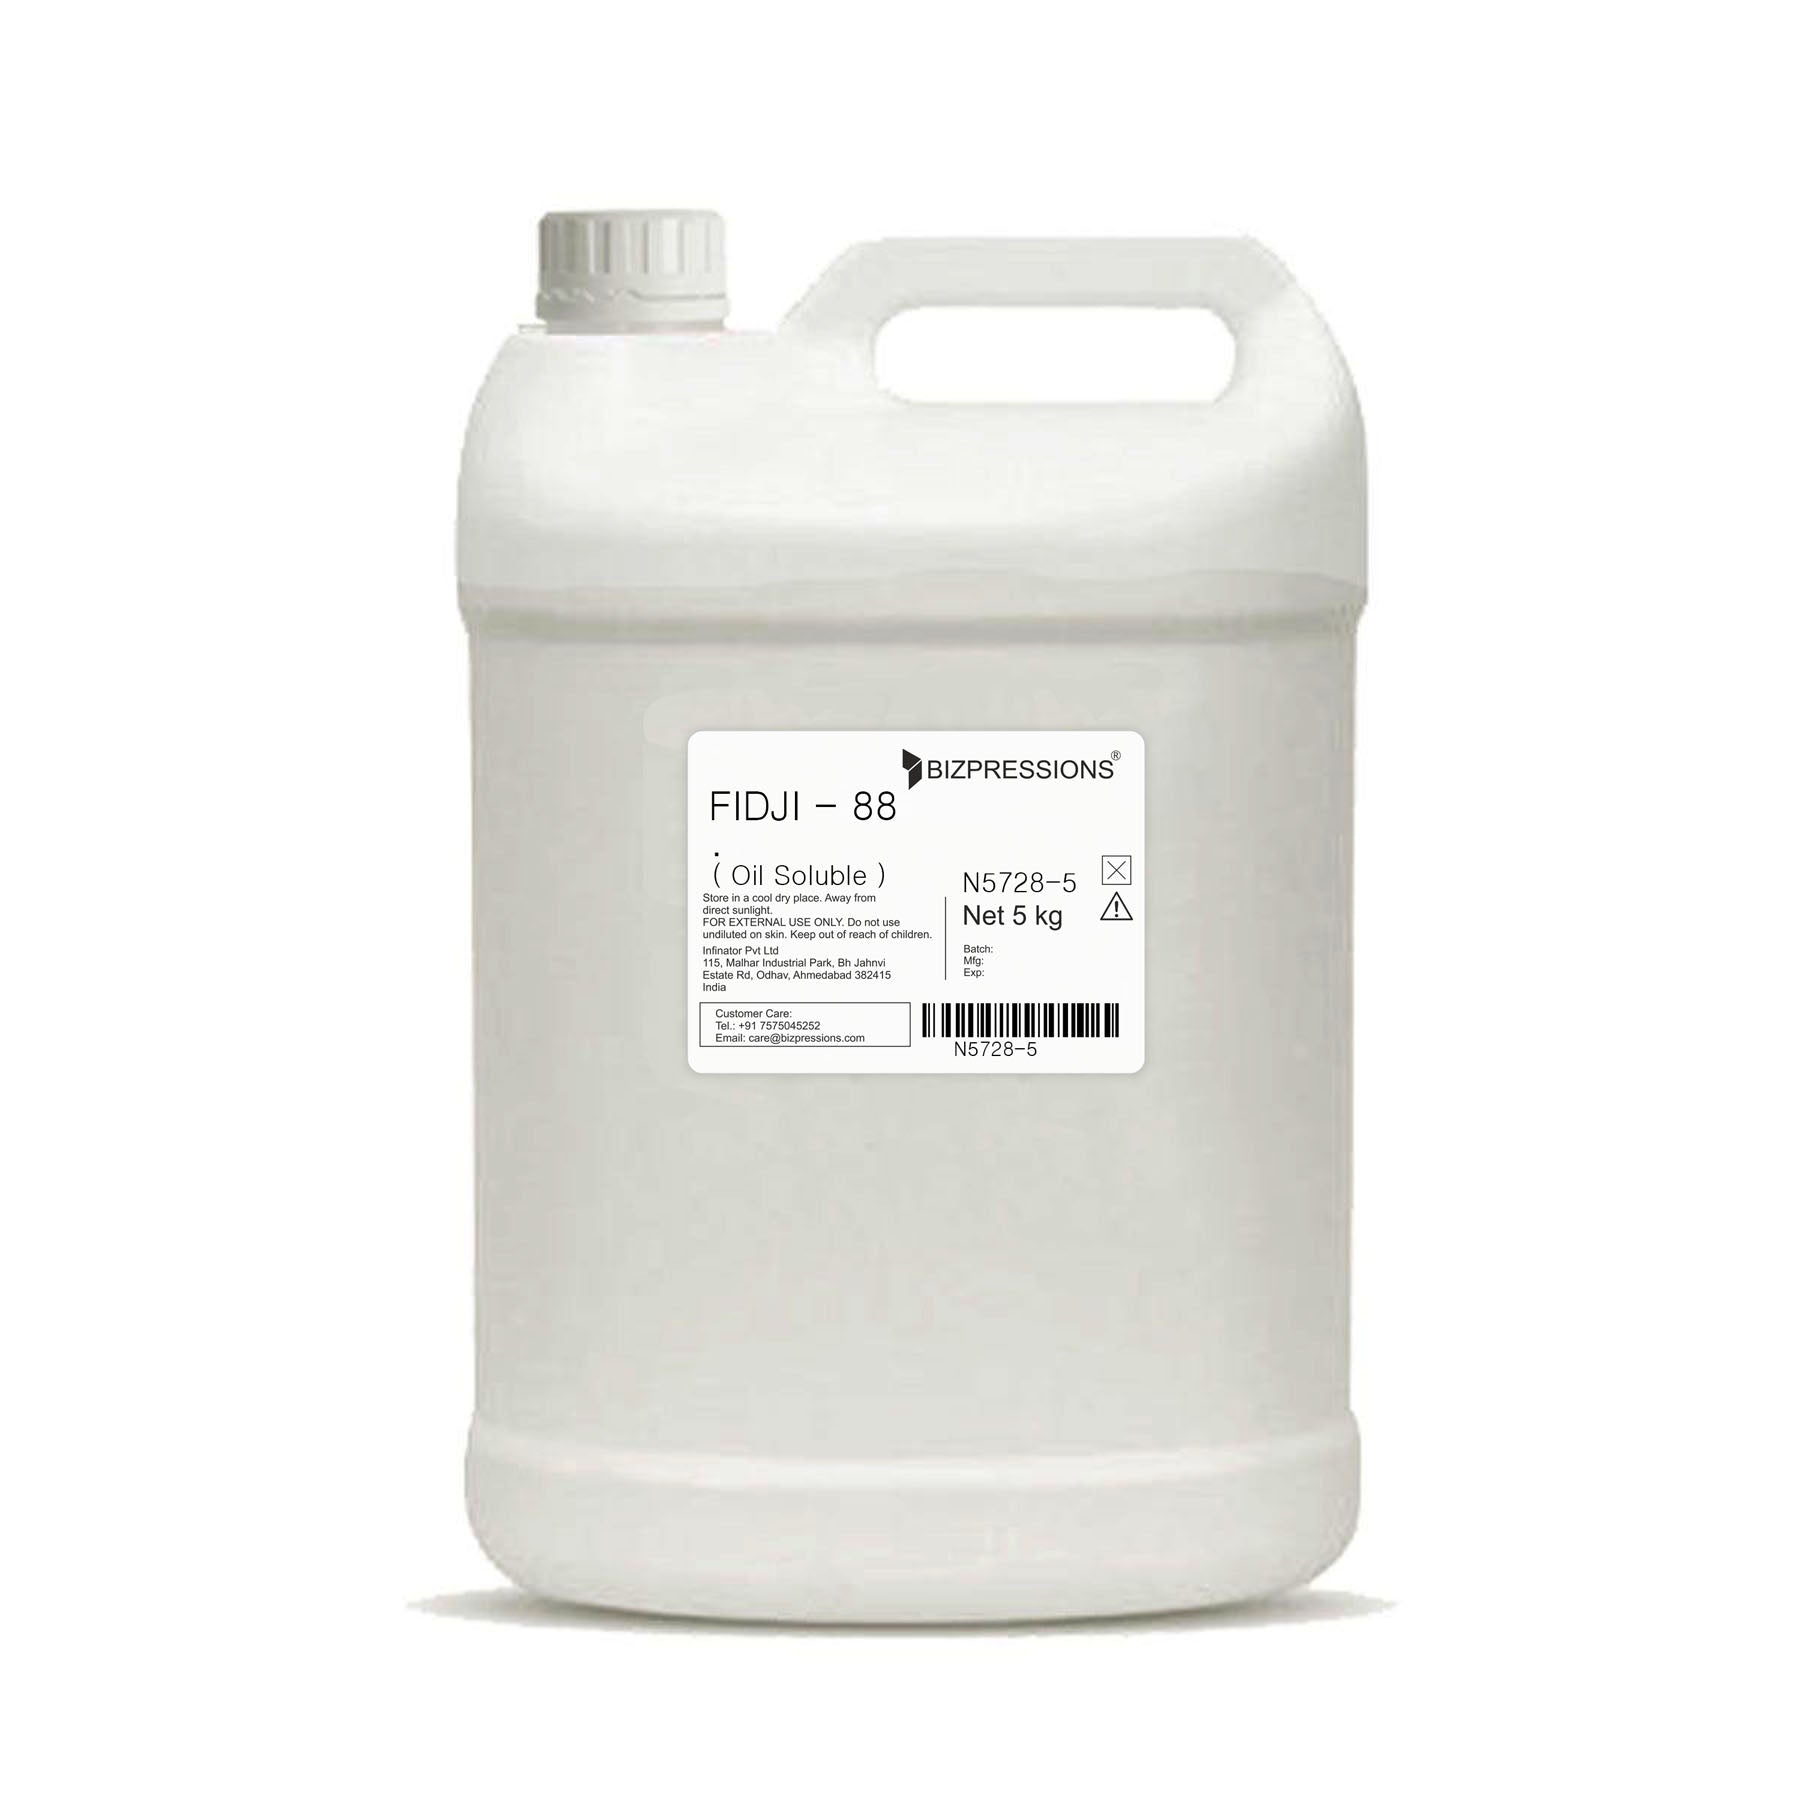 FIDJI - 88 - Fragrance ( Oil Soluble ) - 5 kg